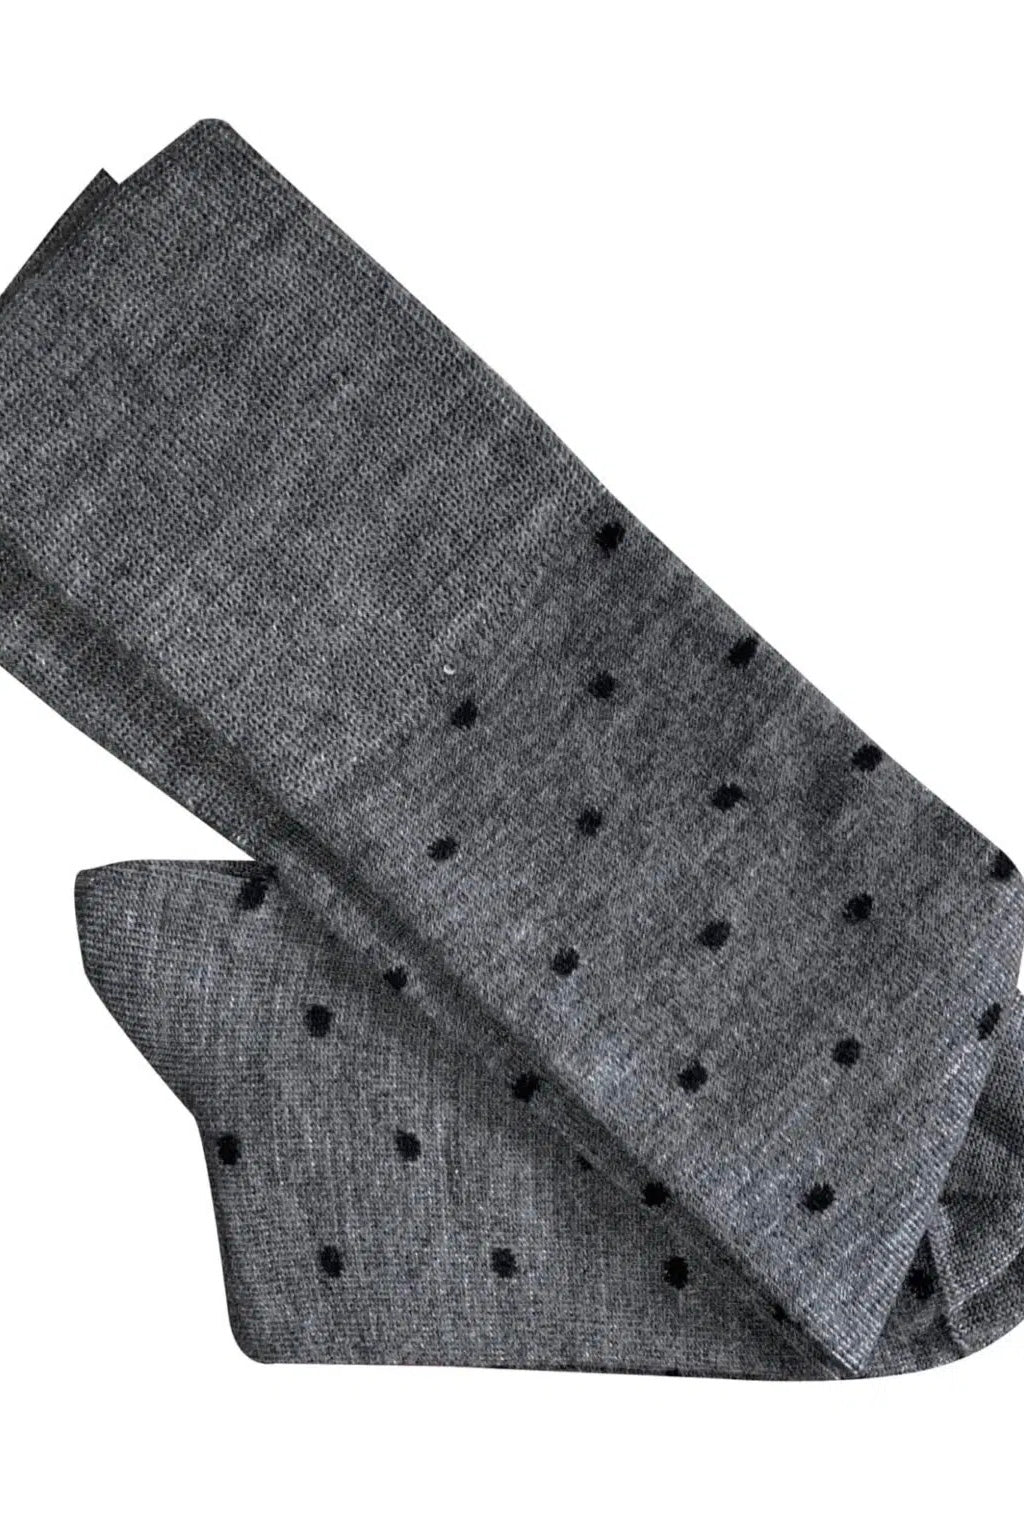 Tightology | Dotty | Grey Black Wool Socks